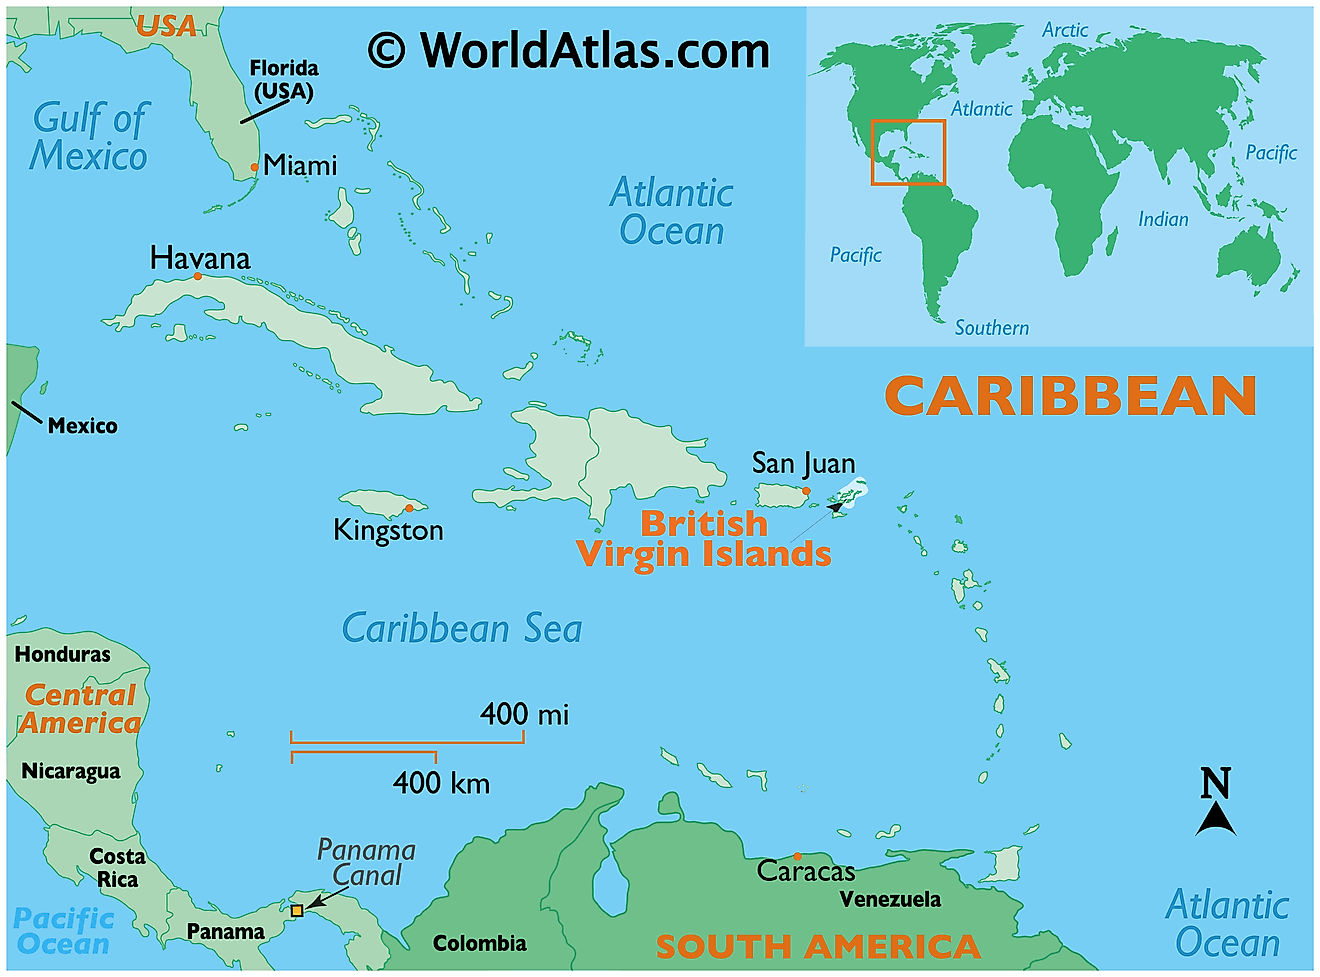 Where is British Virgin Islands?